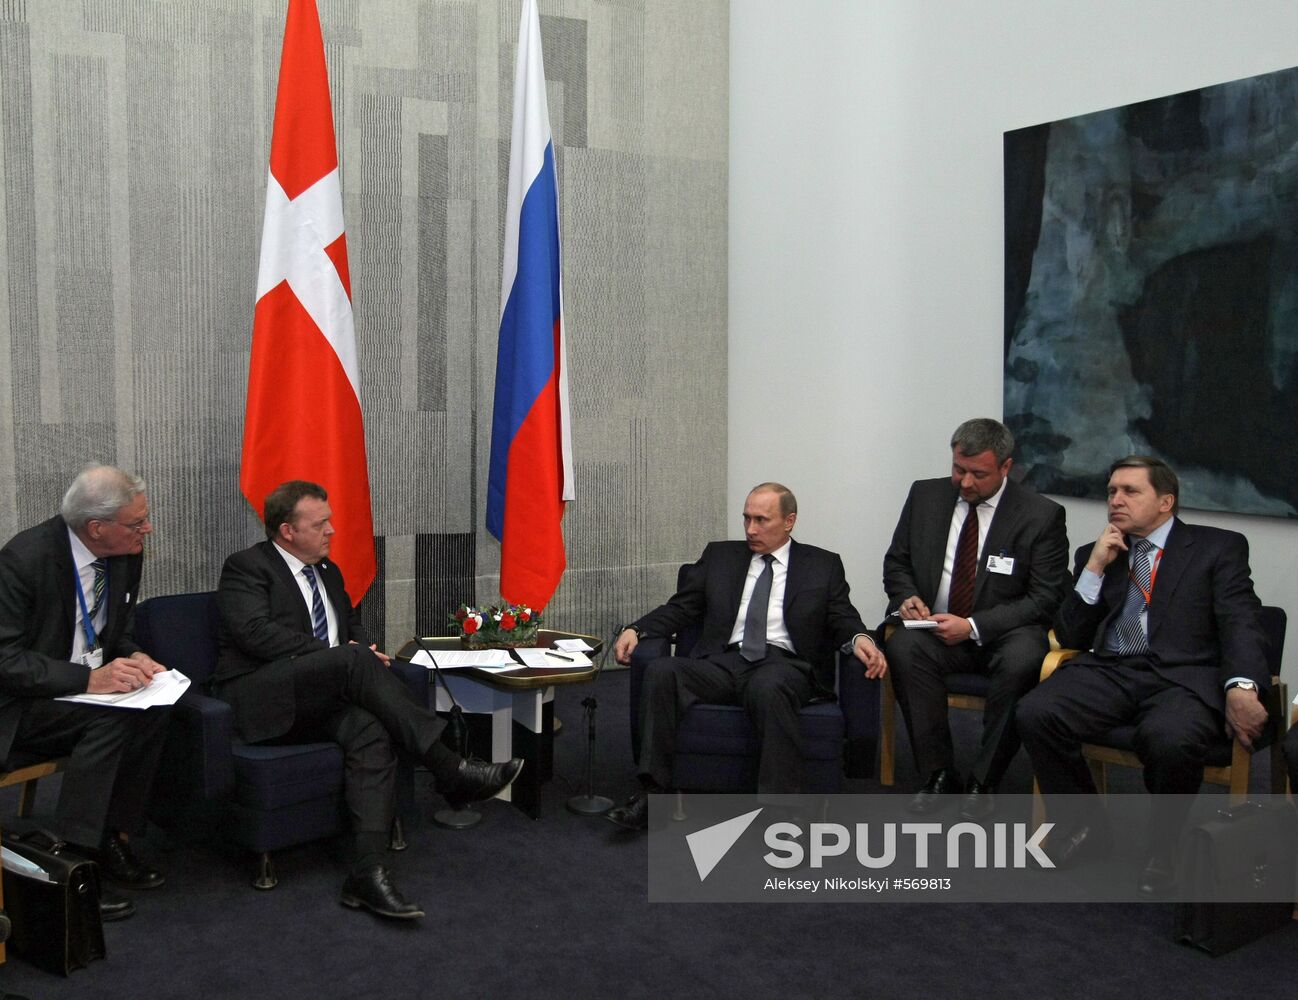 Vladimir Putin meets with Lars Løkke Rasmussen